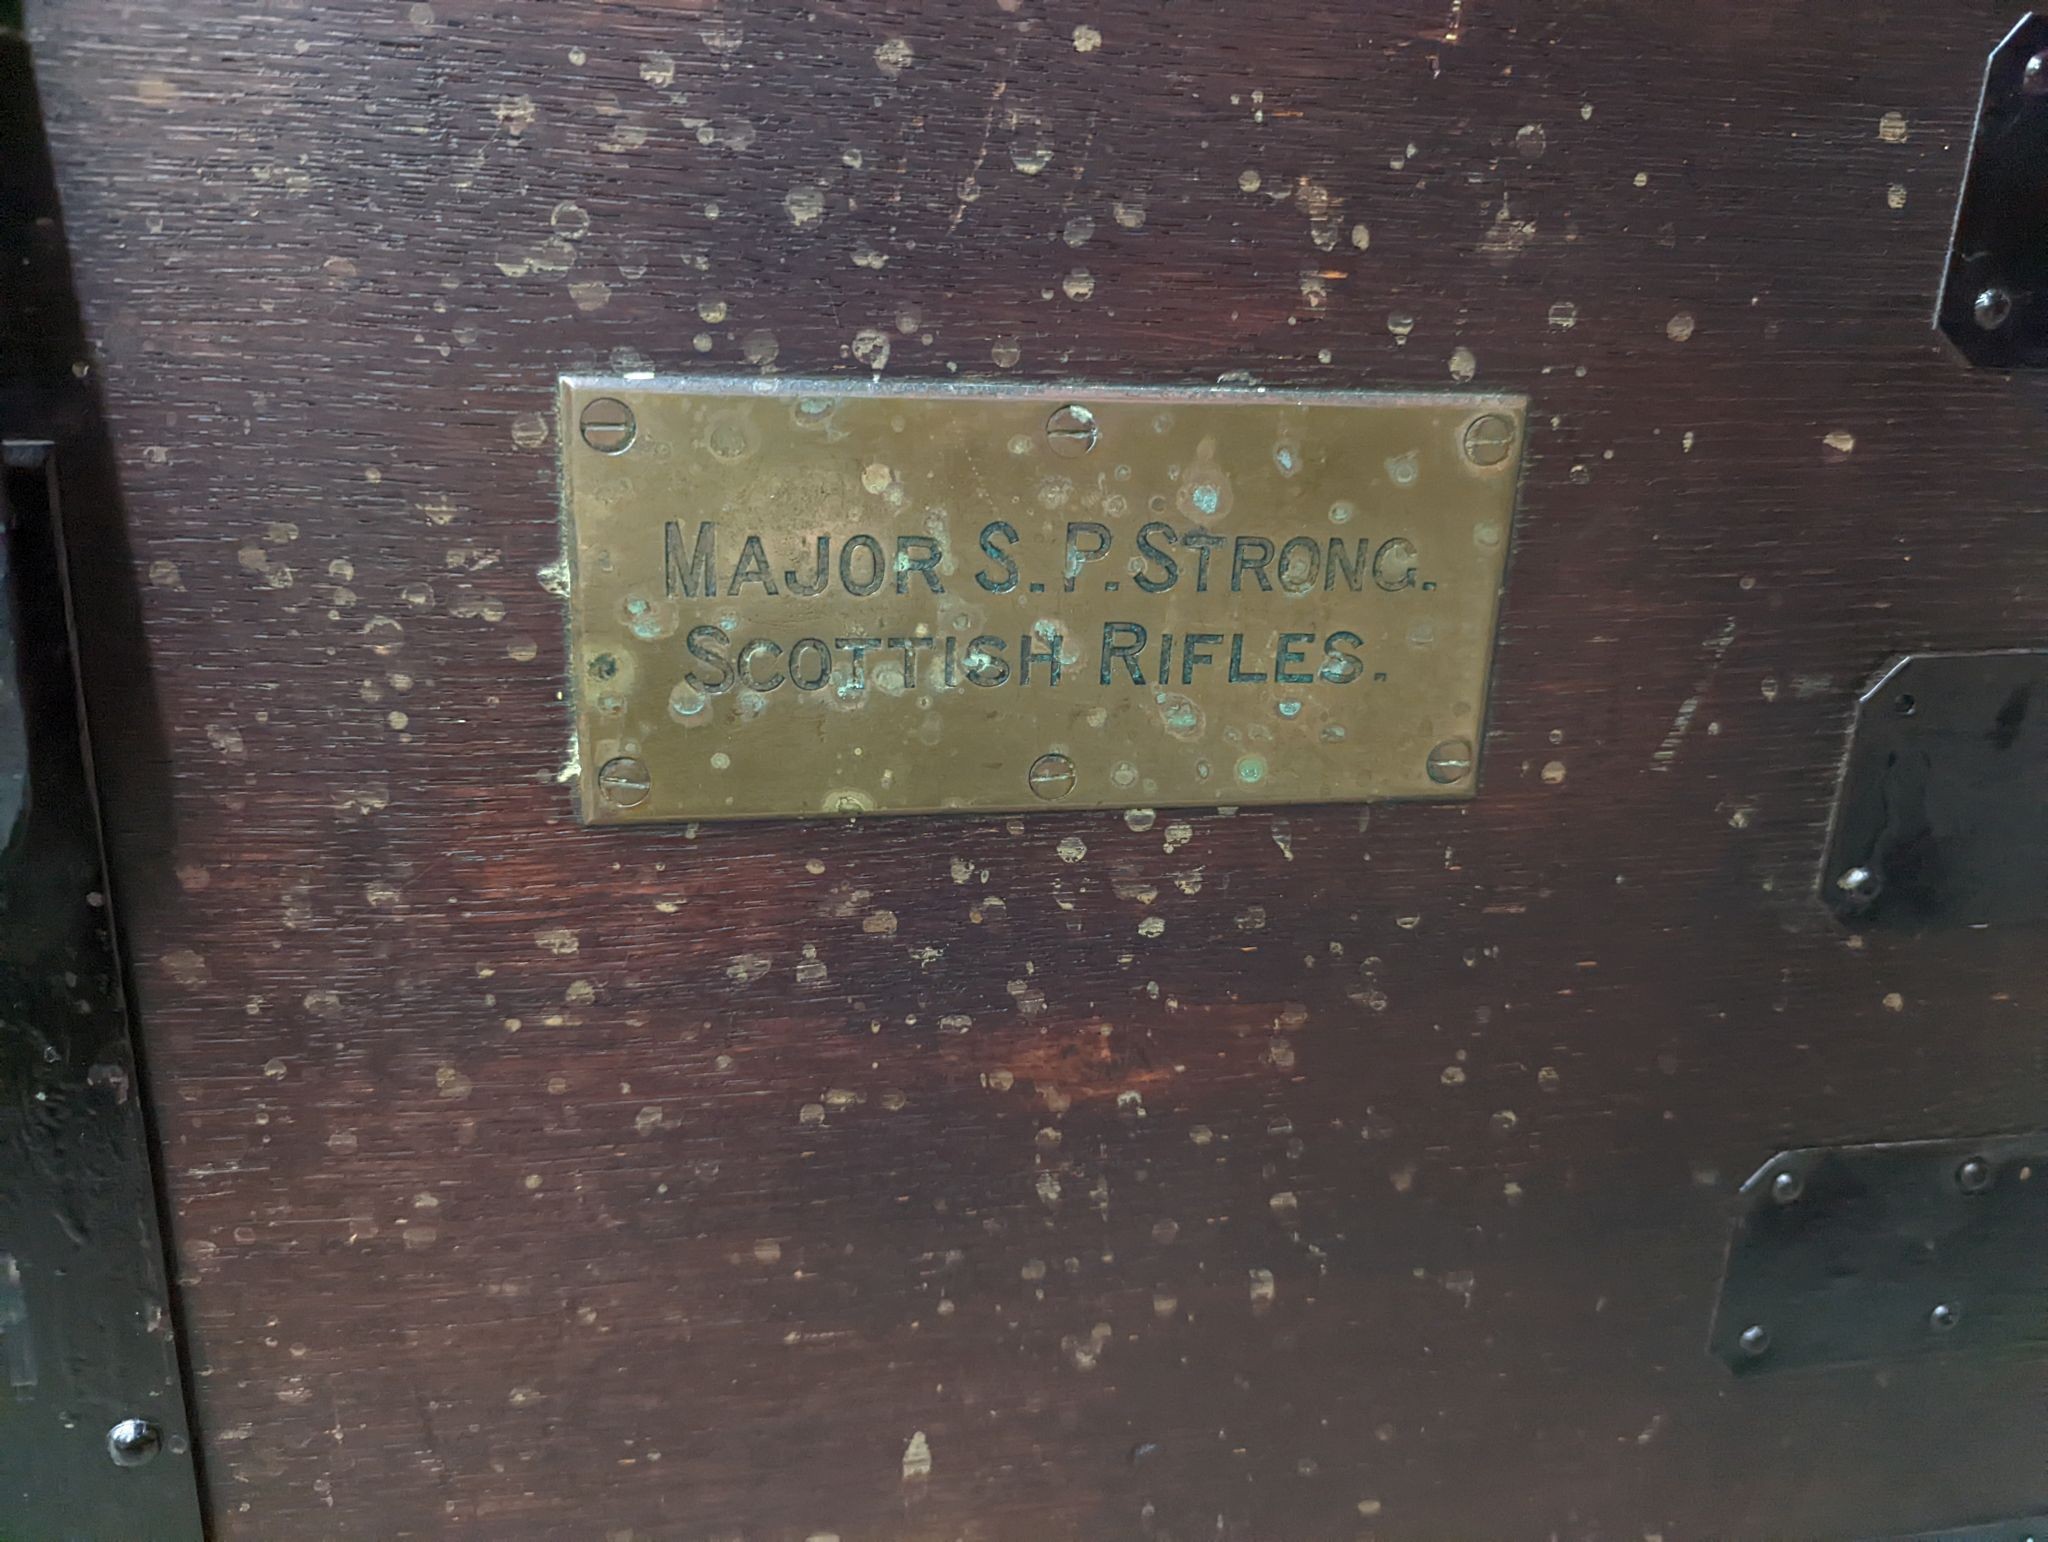 A Victorian iron bound oak silver chest, bears engraved brass plaque Major S. P. Strong, Scottish Rifles, length 82cm, depth 61cm, height 57cm